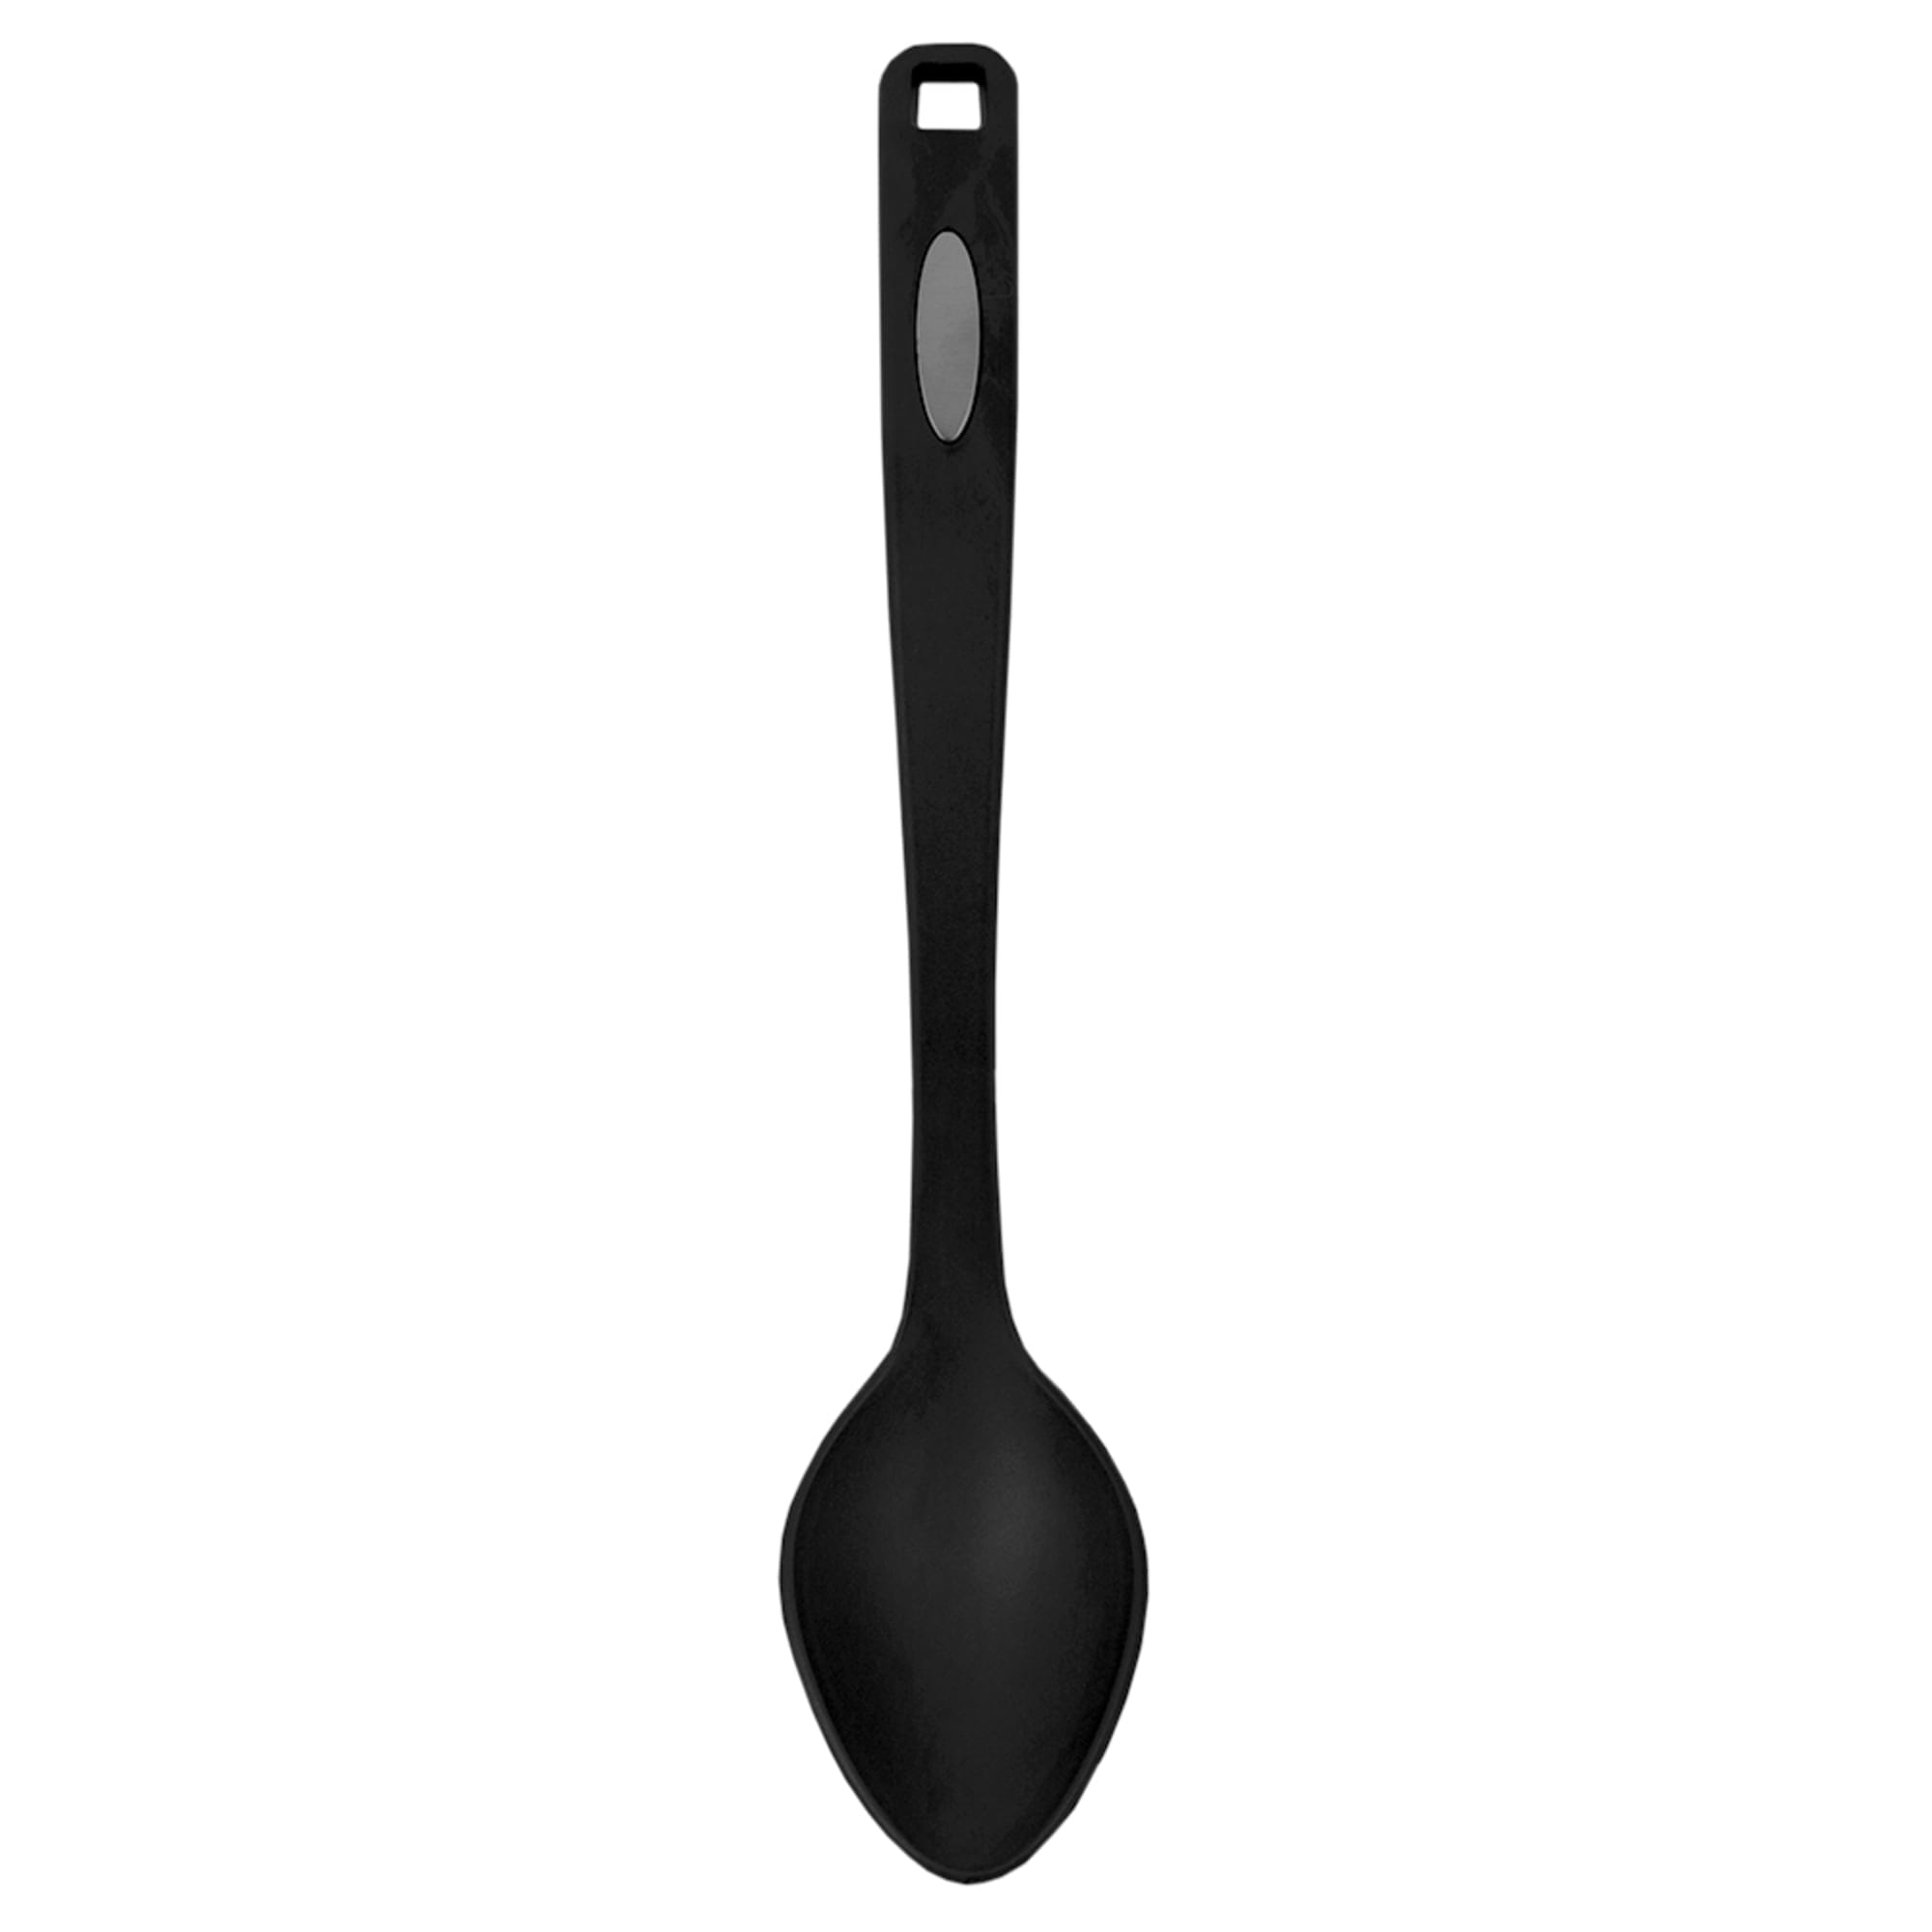 Home Basics Nylon Non-Stick Serving Spoon, Black $1.00 EACH, CASE PACK OF 24